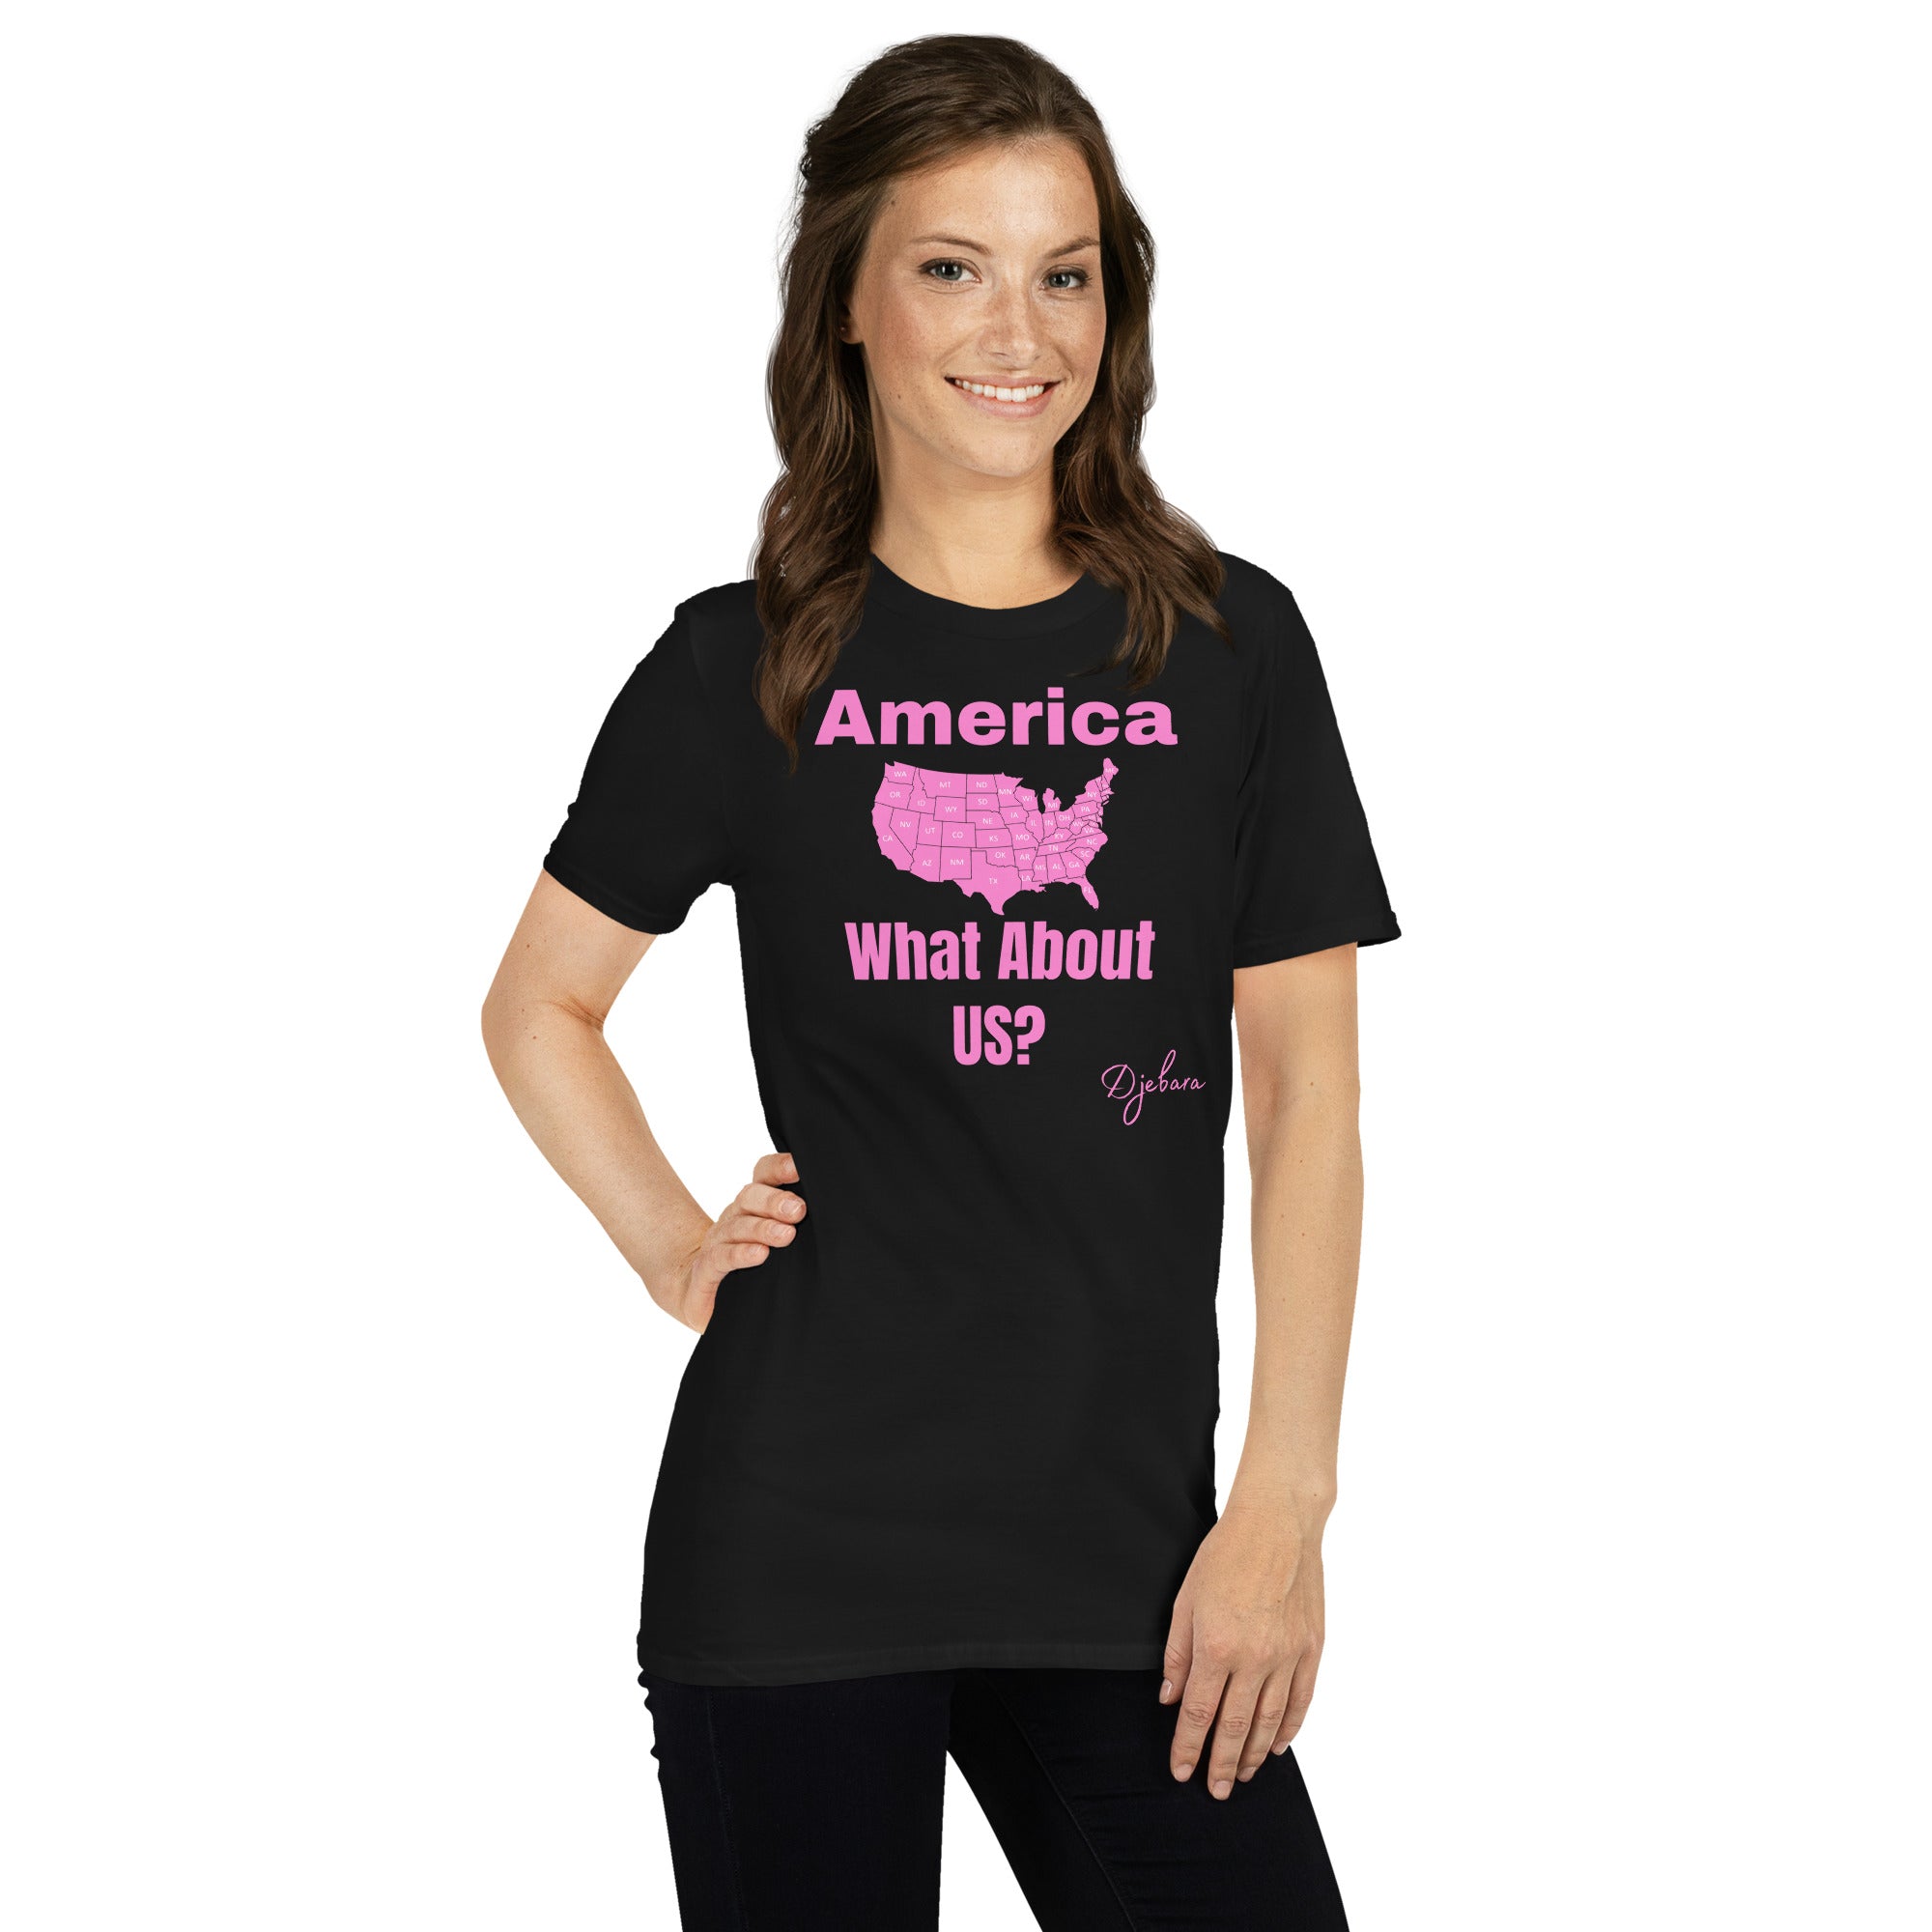 What About US? Short-Sleeve Gildan Unisex T-Shirt (Pink) S-3XL